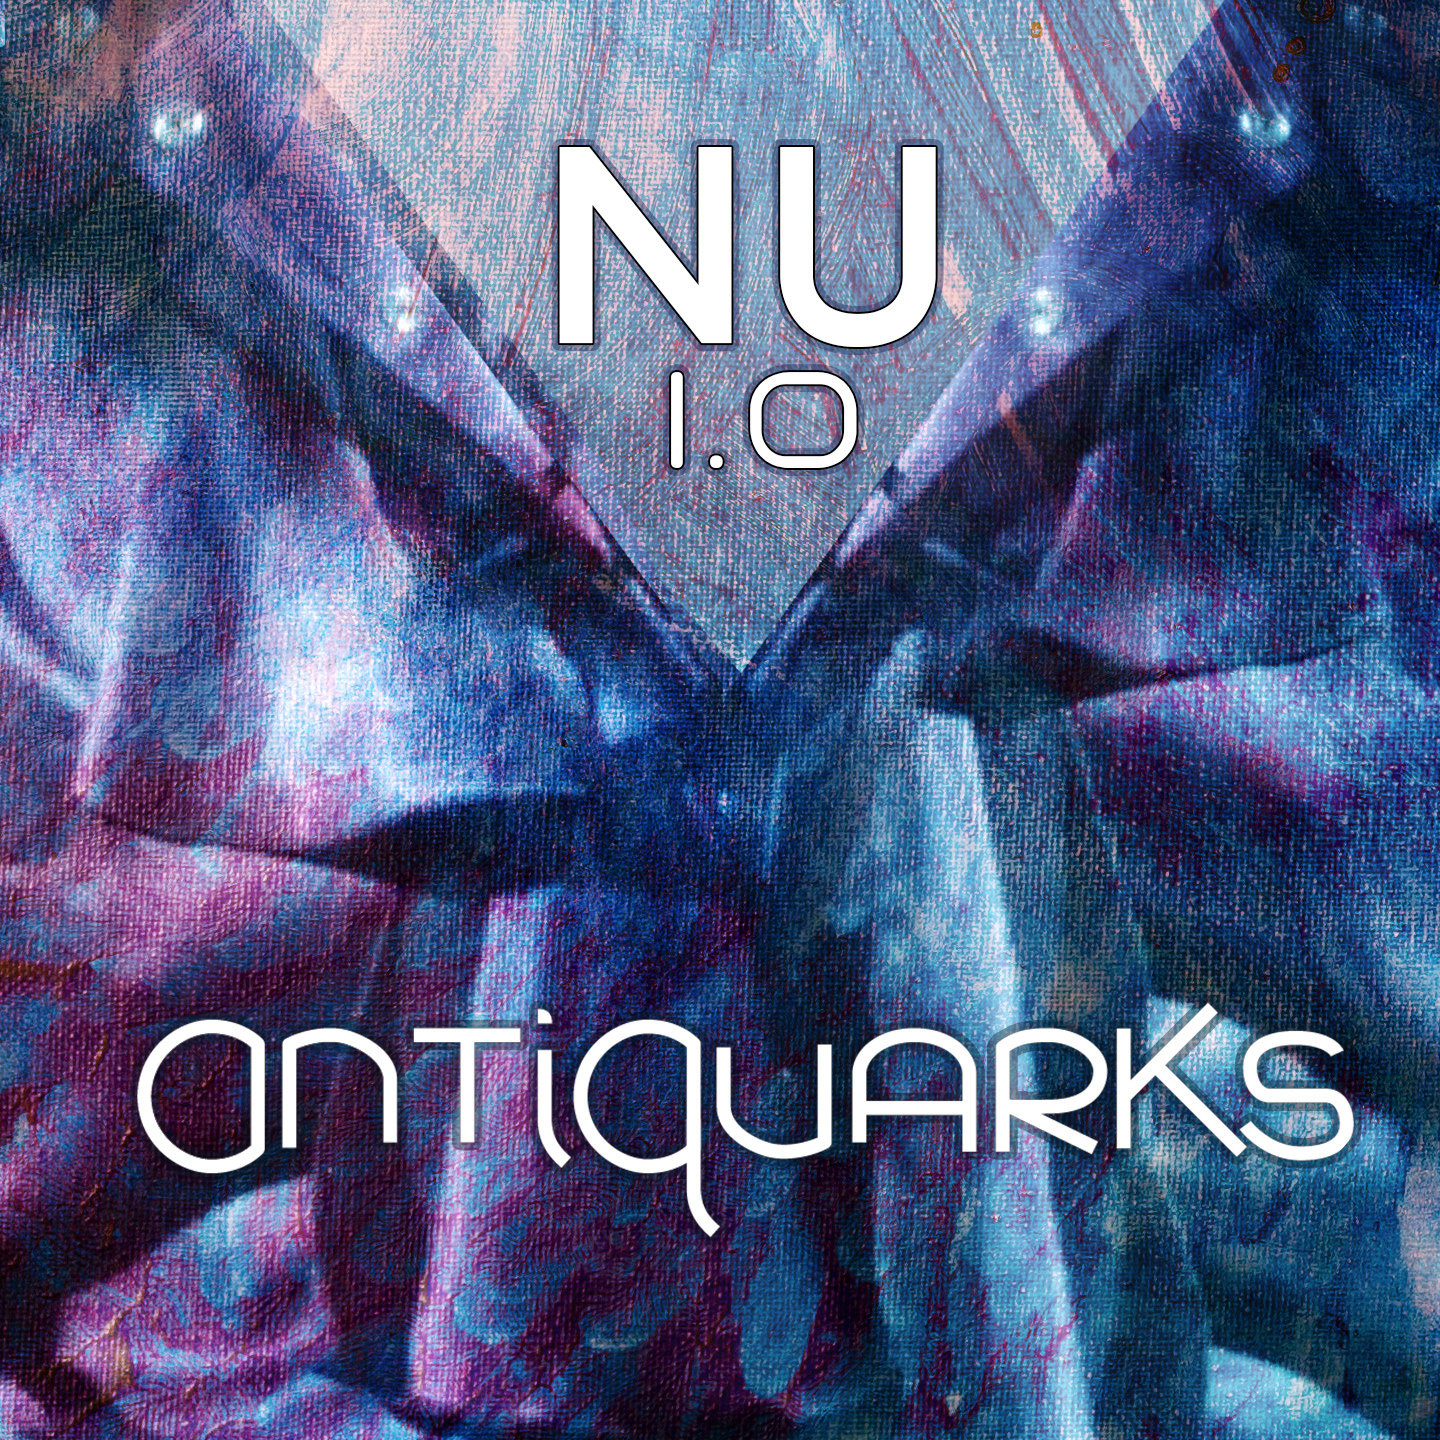 antiquarks pochette album NU 1.0